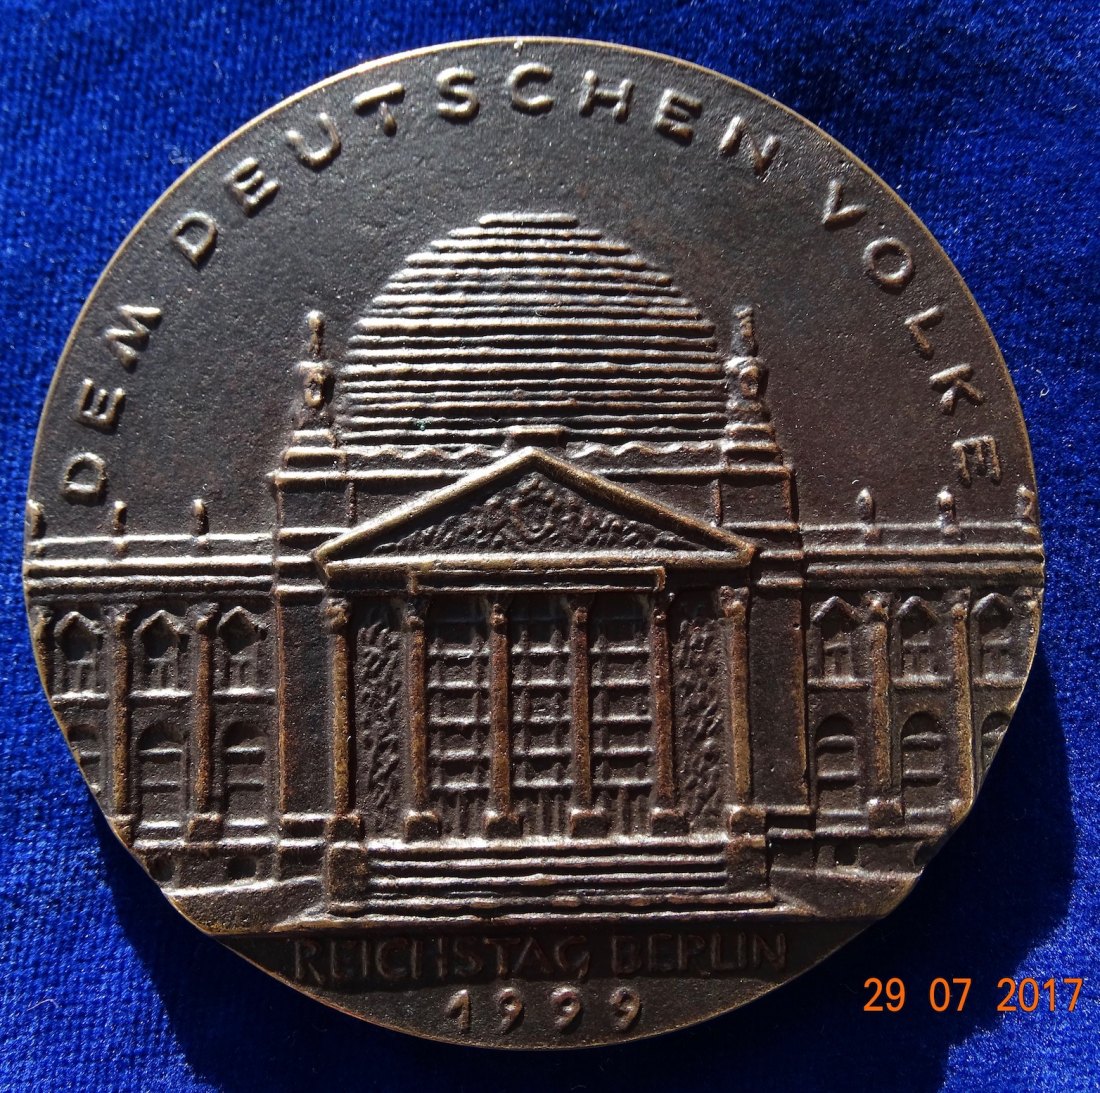  Reichstagsgebäude Eröffnung Berlin 1999, Paul Wallot, Bronze- Medaille von Geralf  Günzel   